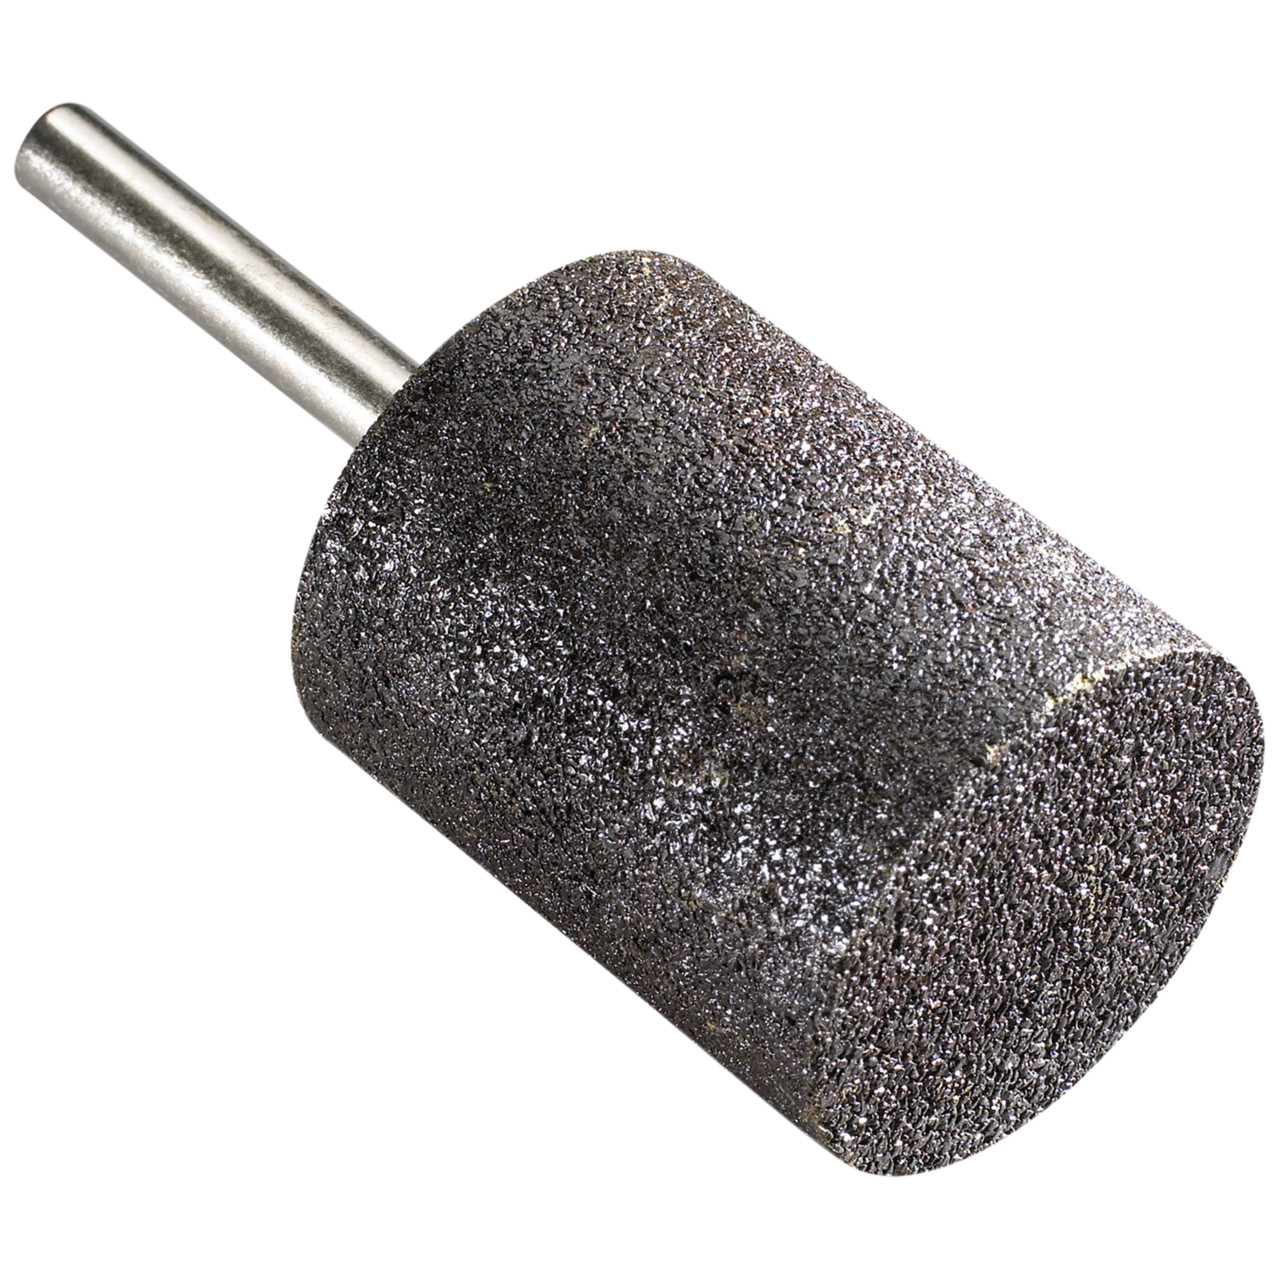 Tyrolit Punti montati in resina DxT-SxL 10x32-6x40 Per ghisa, forma: 52W - cilindro (punto montato), Art. 21094